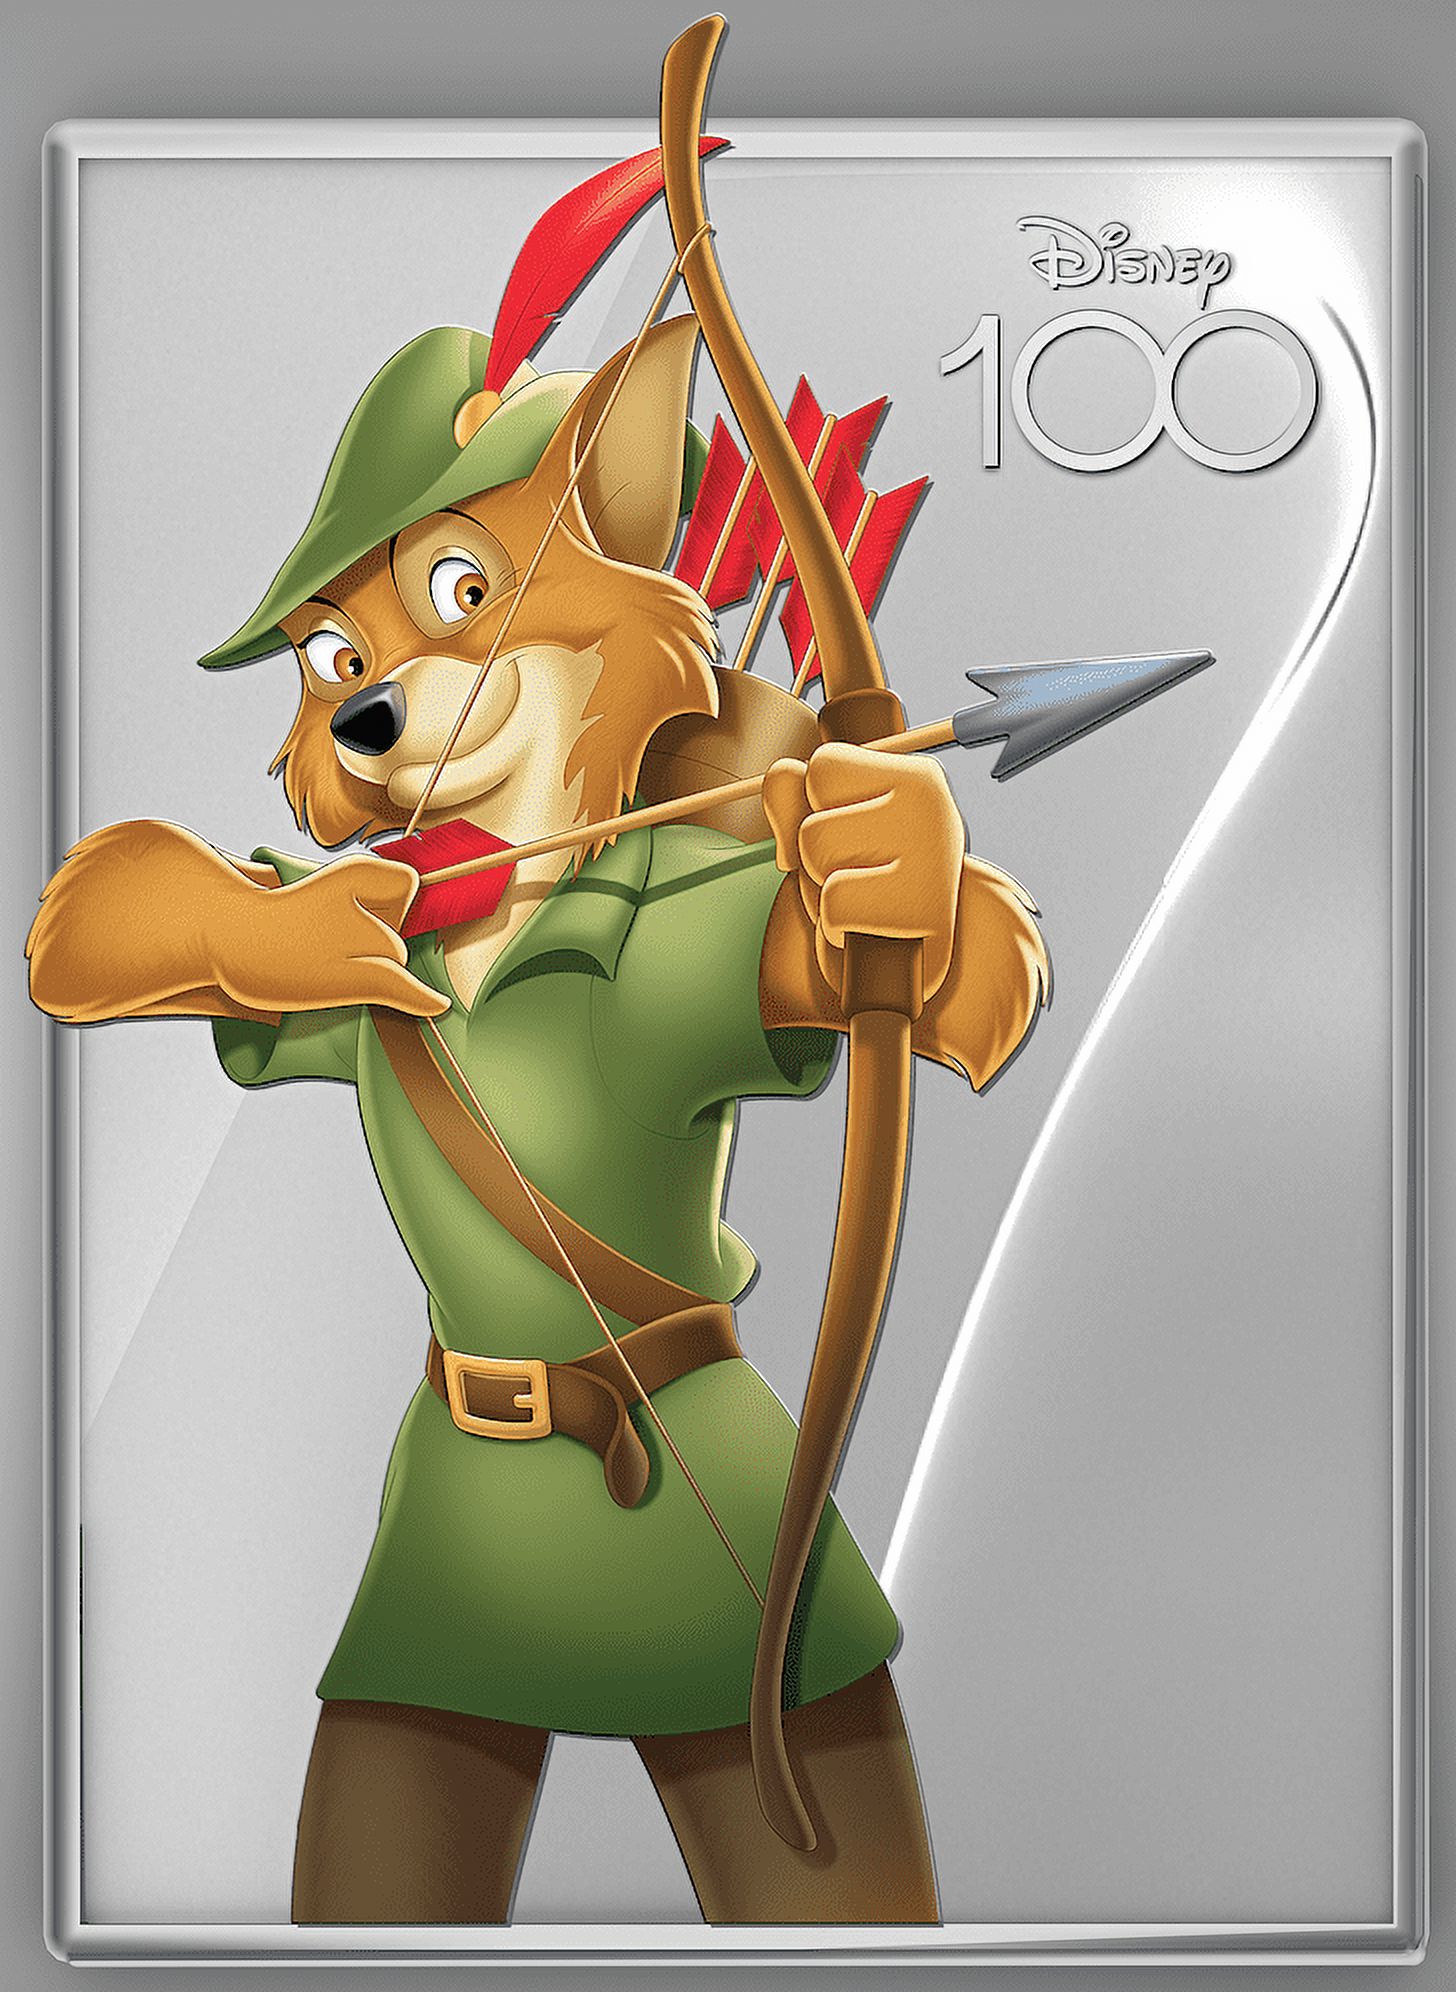 Robin Hood - Disney100 Edition Walmart Exclusive (Blu-ray + DVD + Digital Code) - image 3 of 11